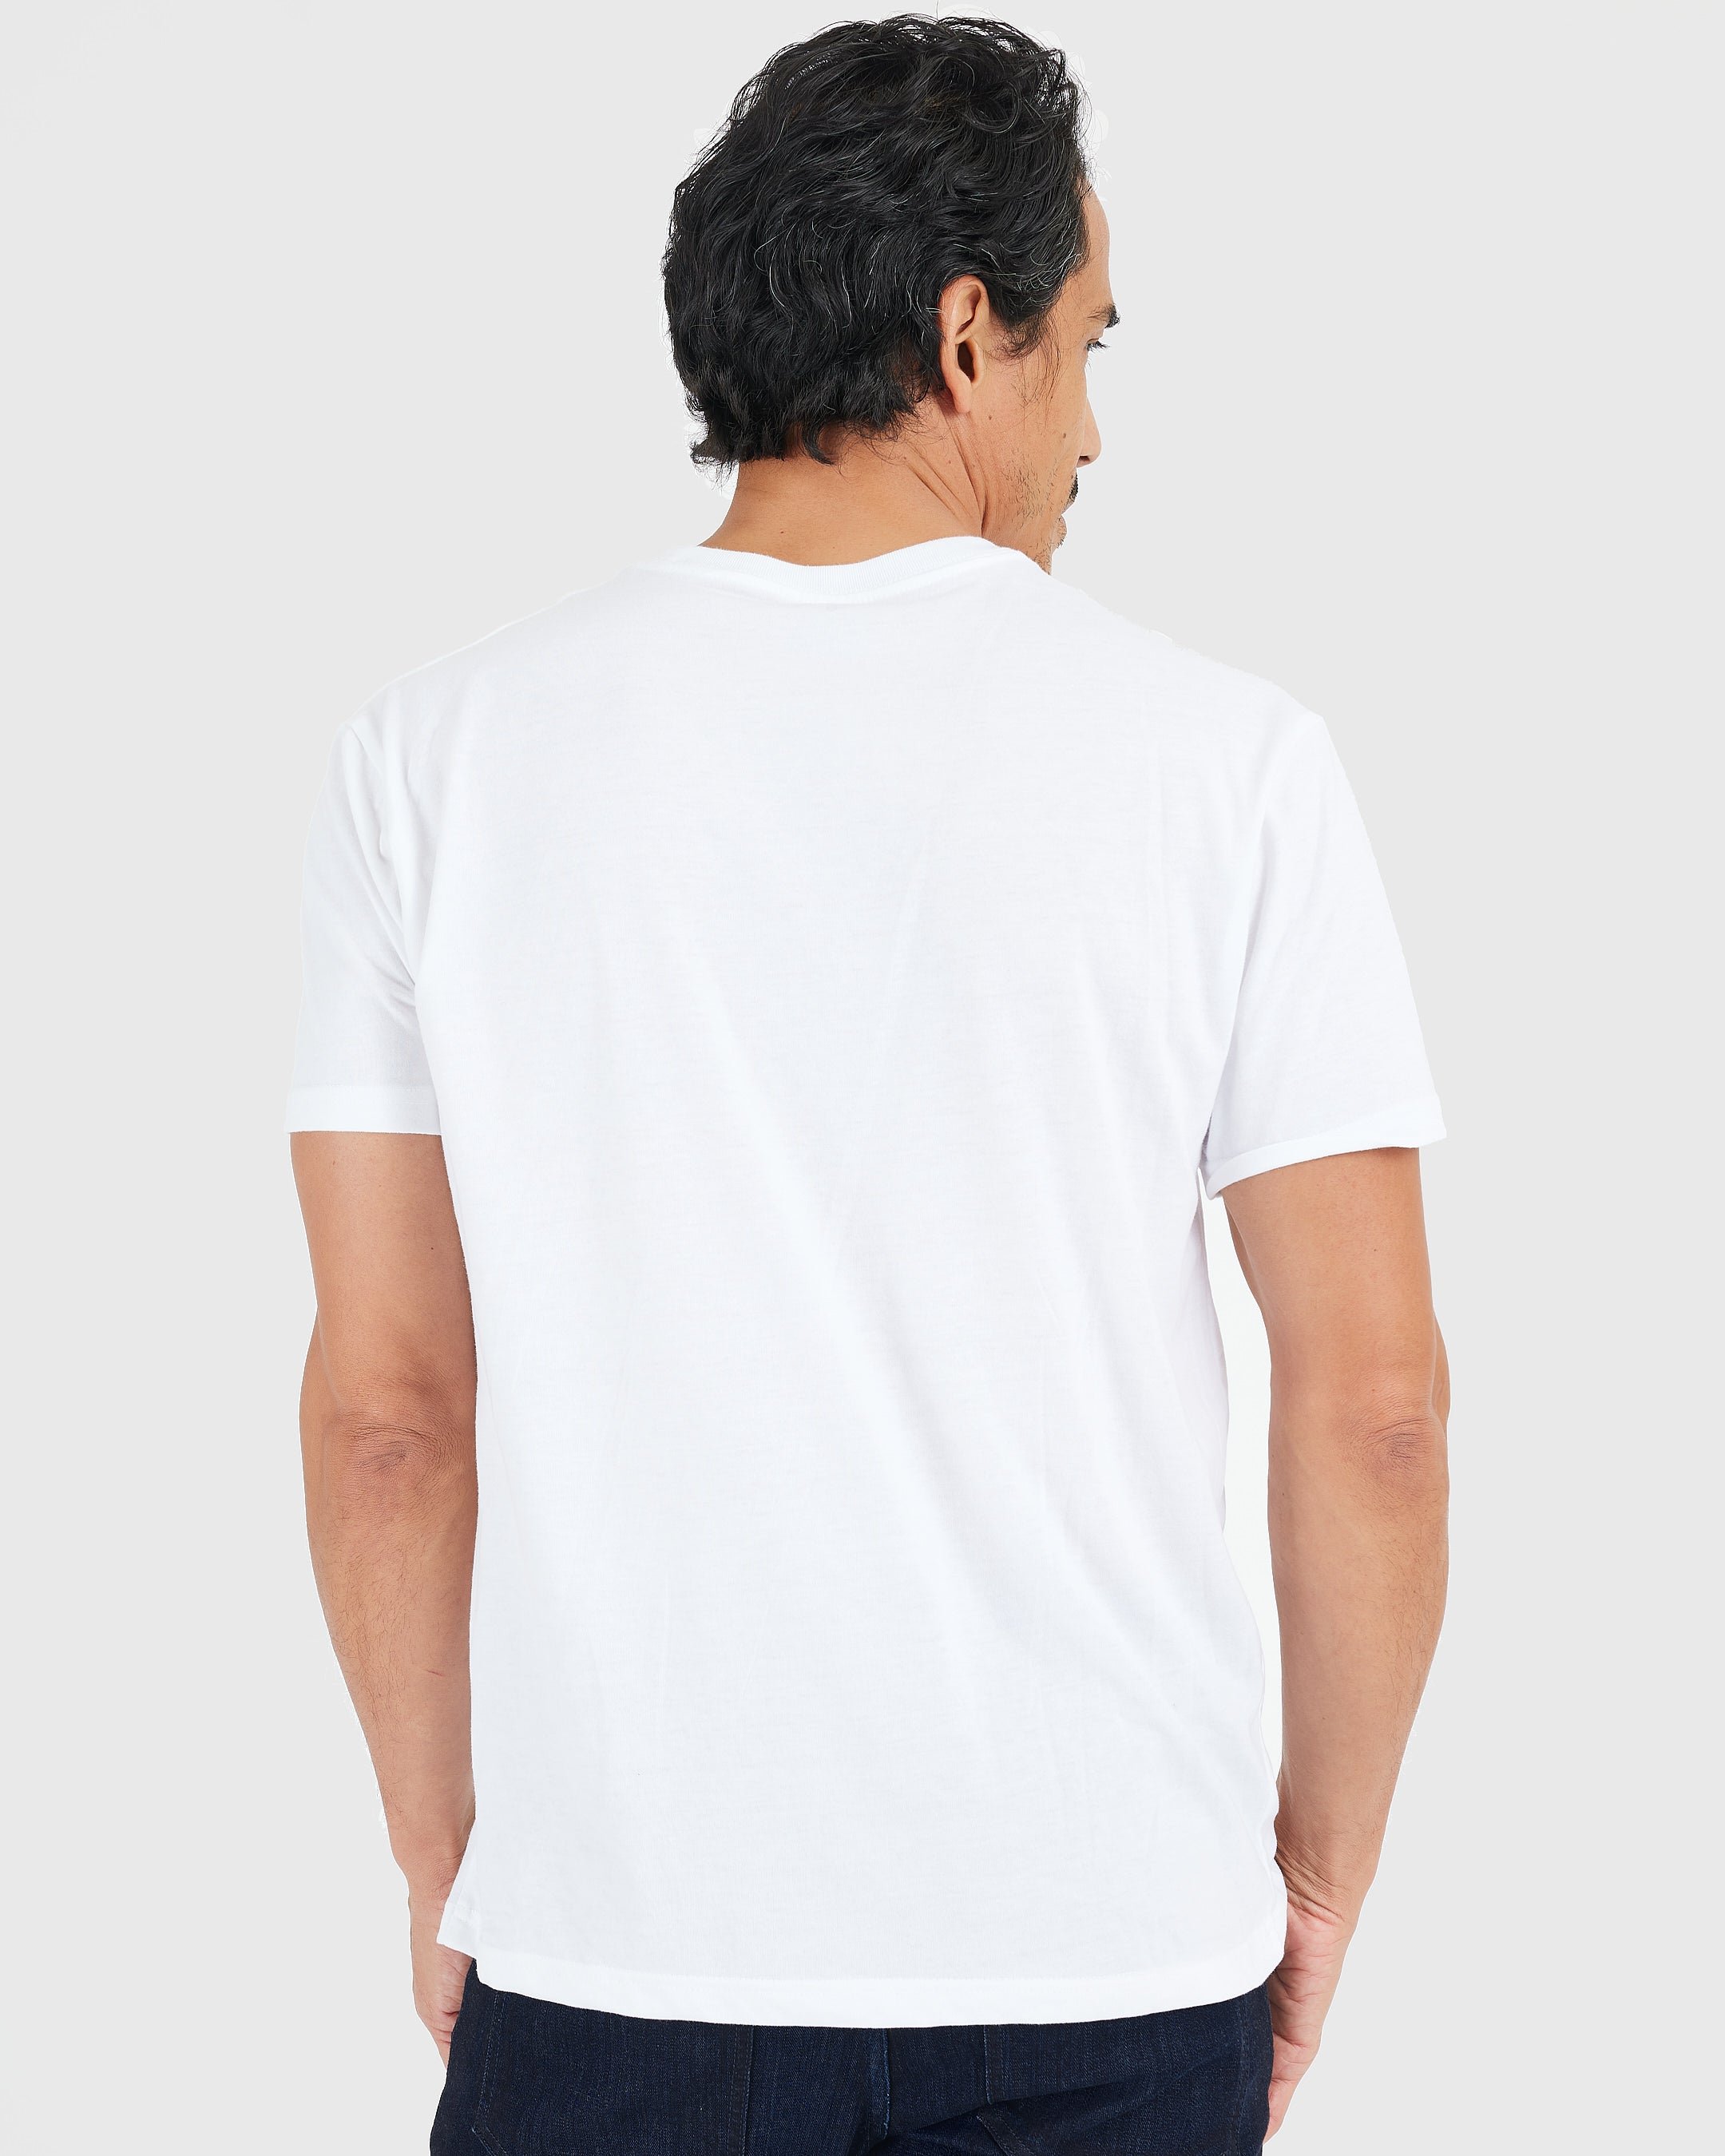 White Crew Neck T-Shirt